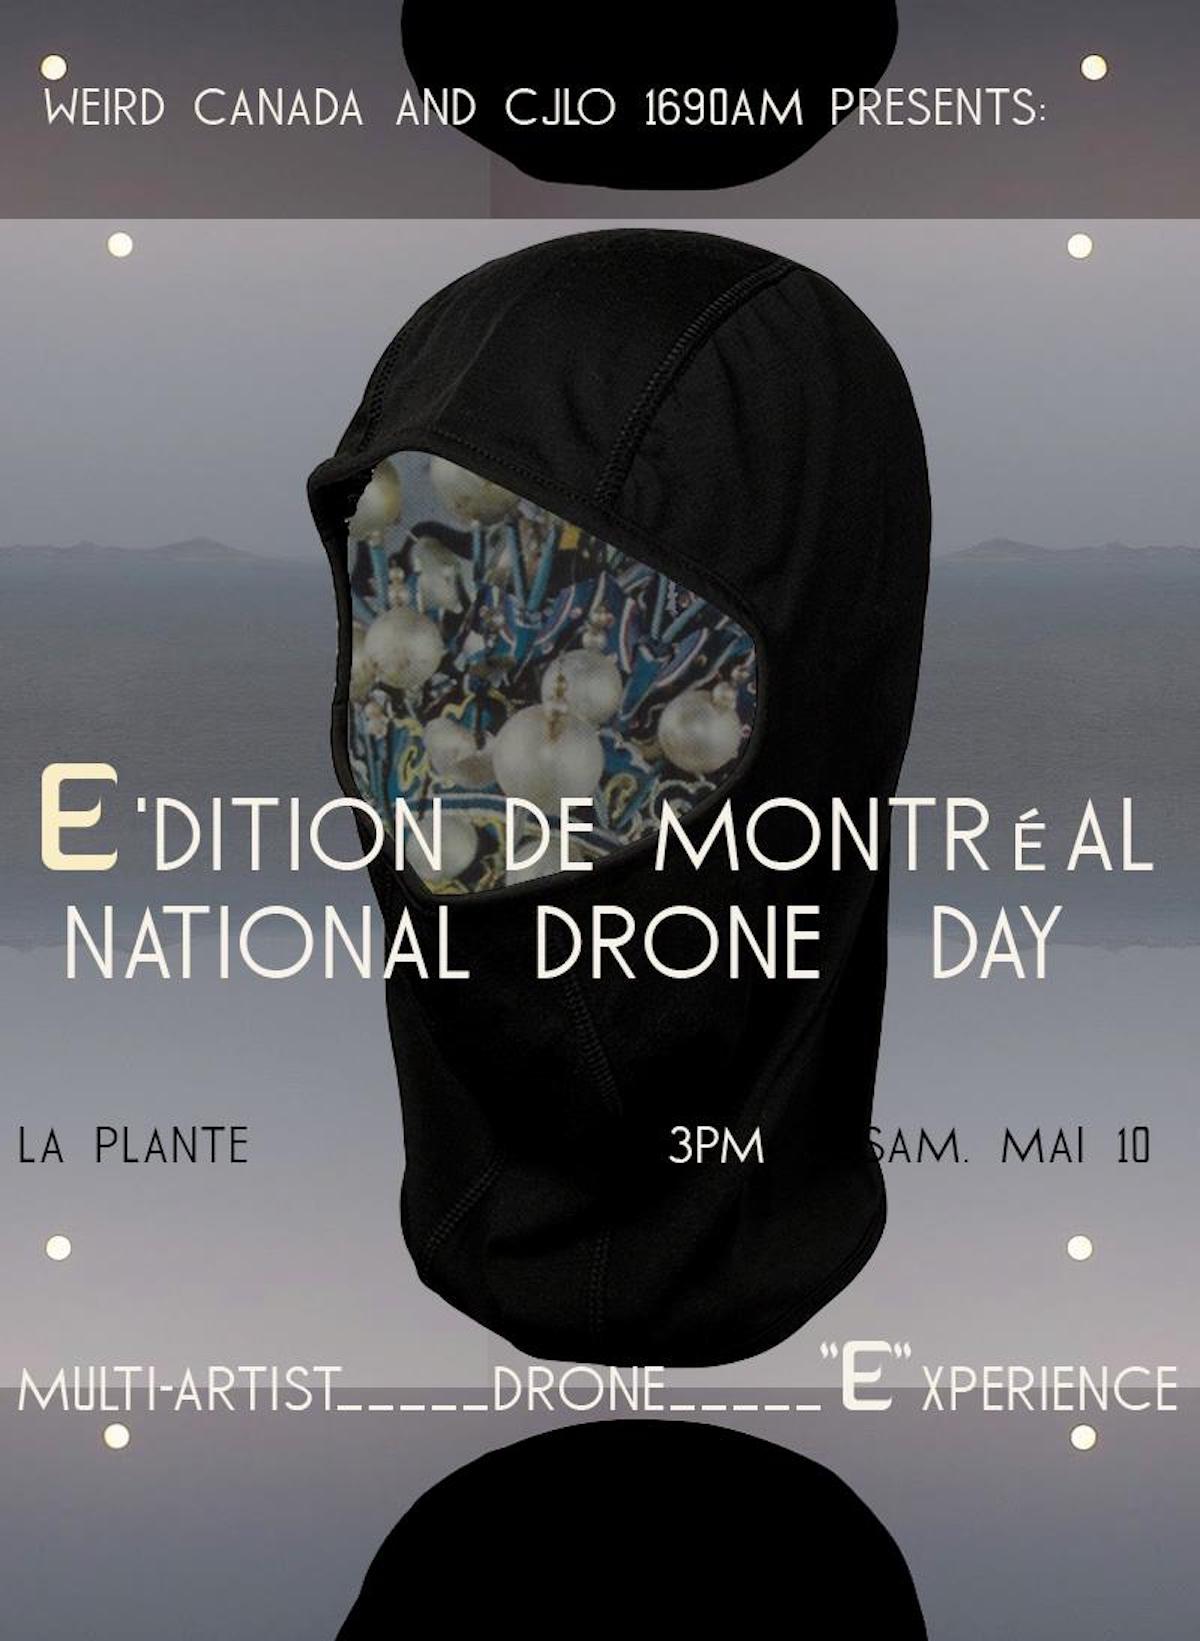 Ski mask art with the text 'E'DITION DE MONTREAL, MULTI-ARTIST DRONE 'E'XPERIENCE'